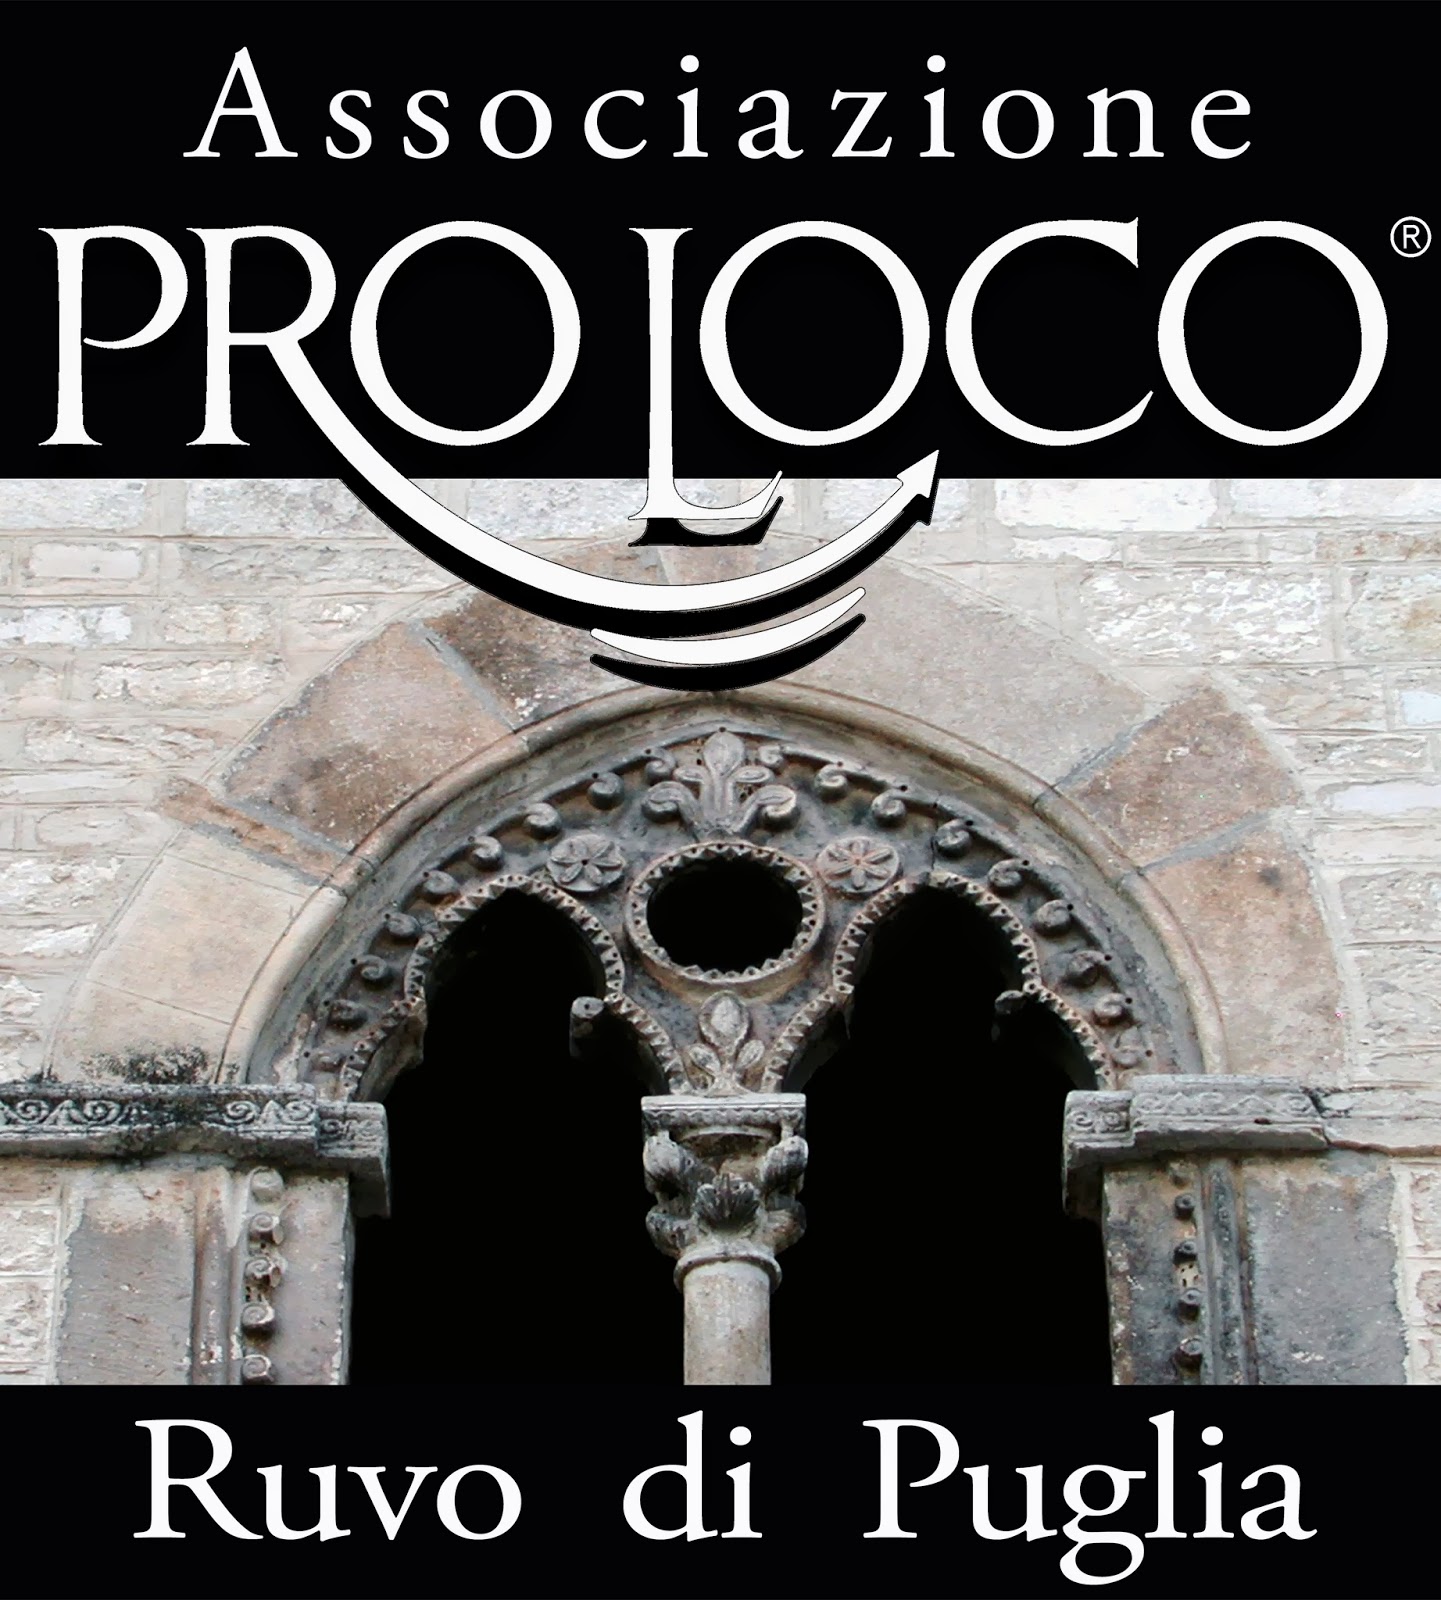 http://www.prolocoruvodipuglia.it/